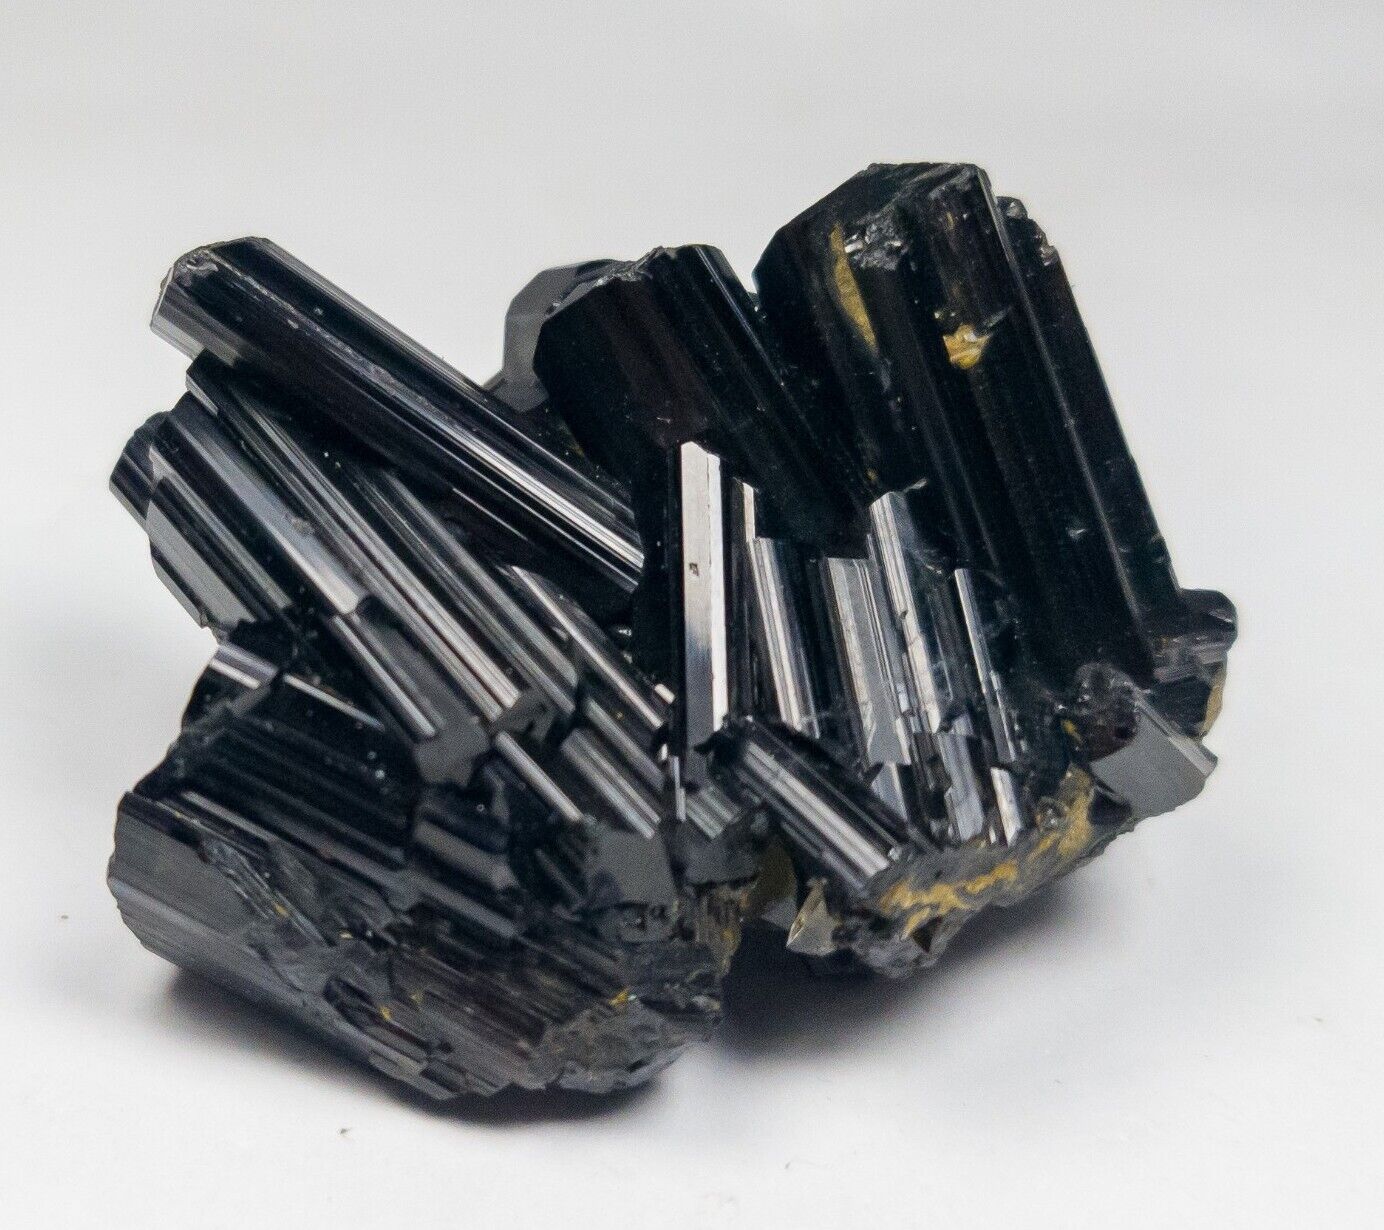 Shiny Terminated Black Tourmaline Crystal Cluster  Skardu, Pakistan  51g